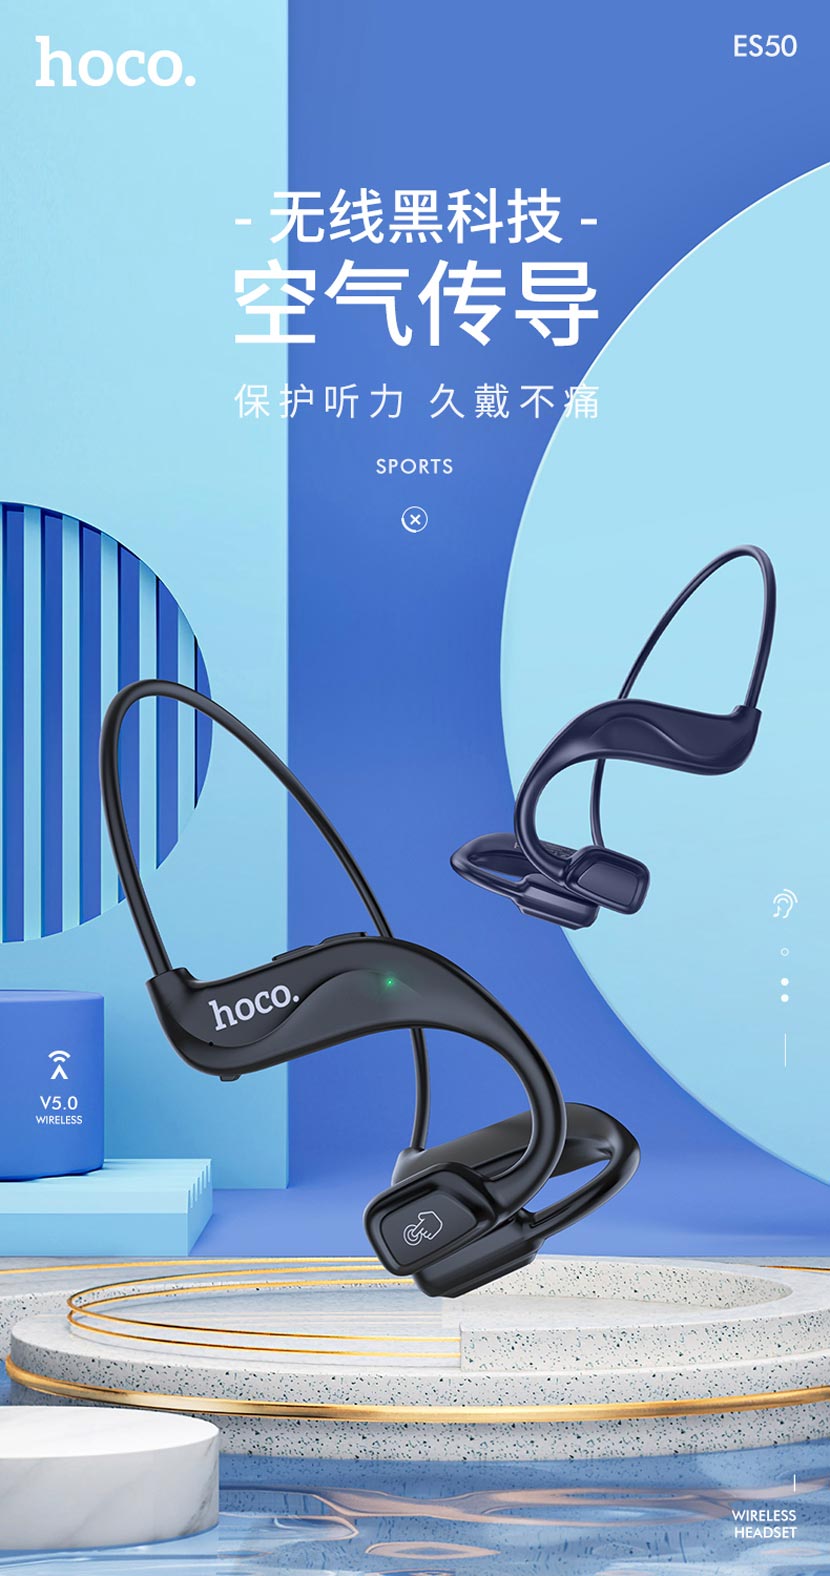 hoco news es50 rima air conduction bt headset cn